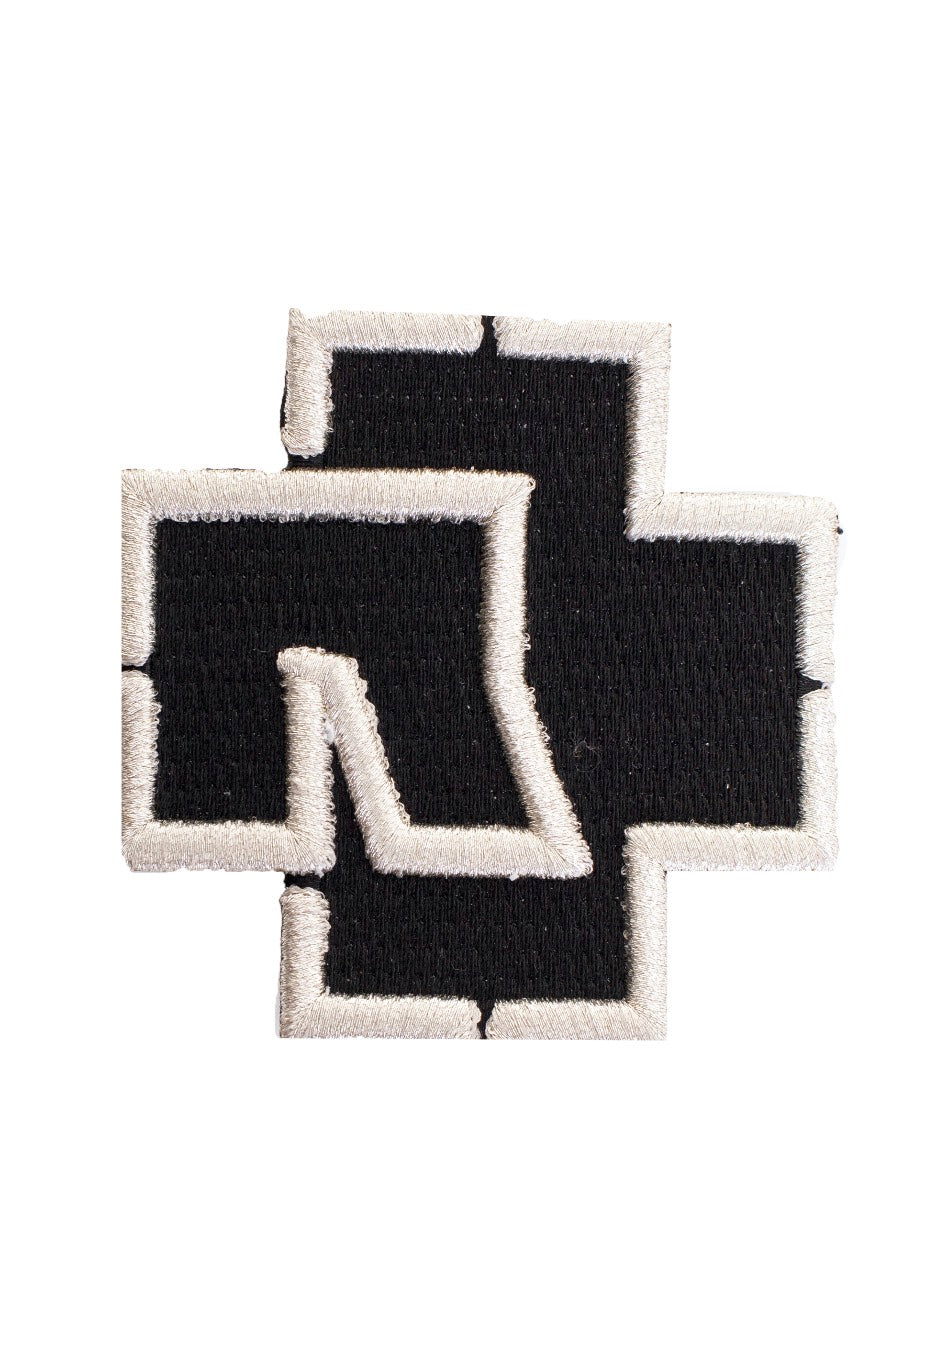 Rammstein - Logo - Patch